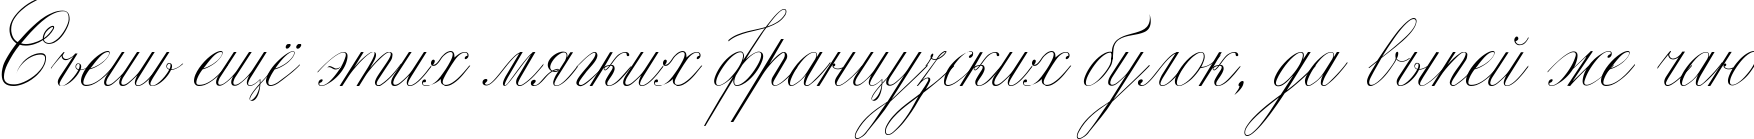 Пример написания шрифтом Classica Two текста на русском